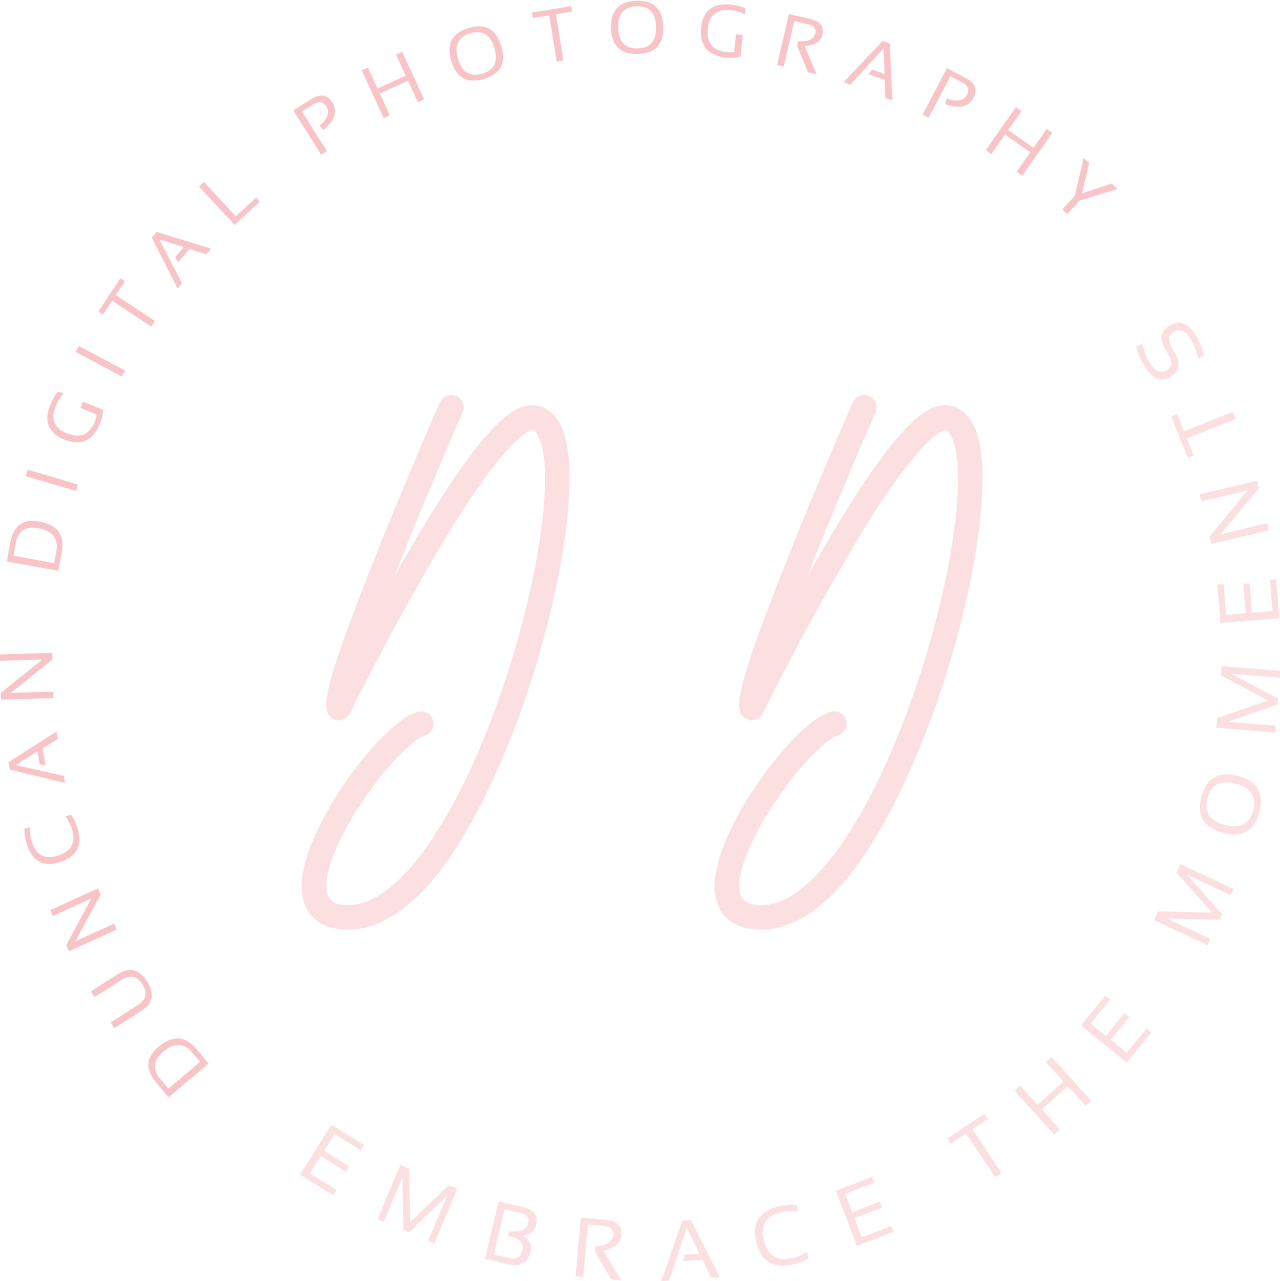 Duncan Digital photography's logo